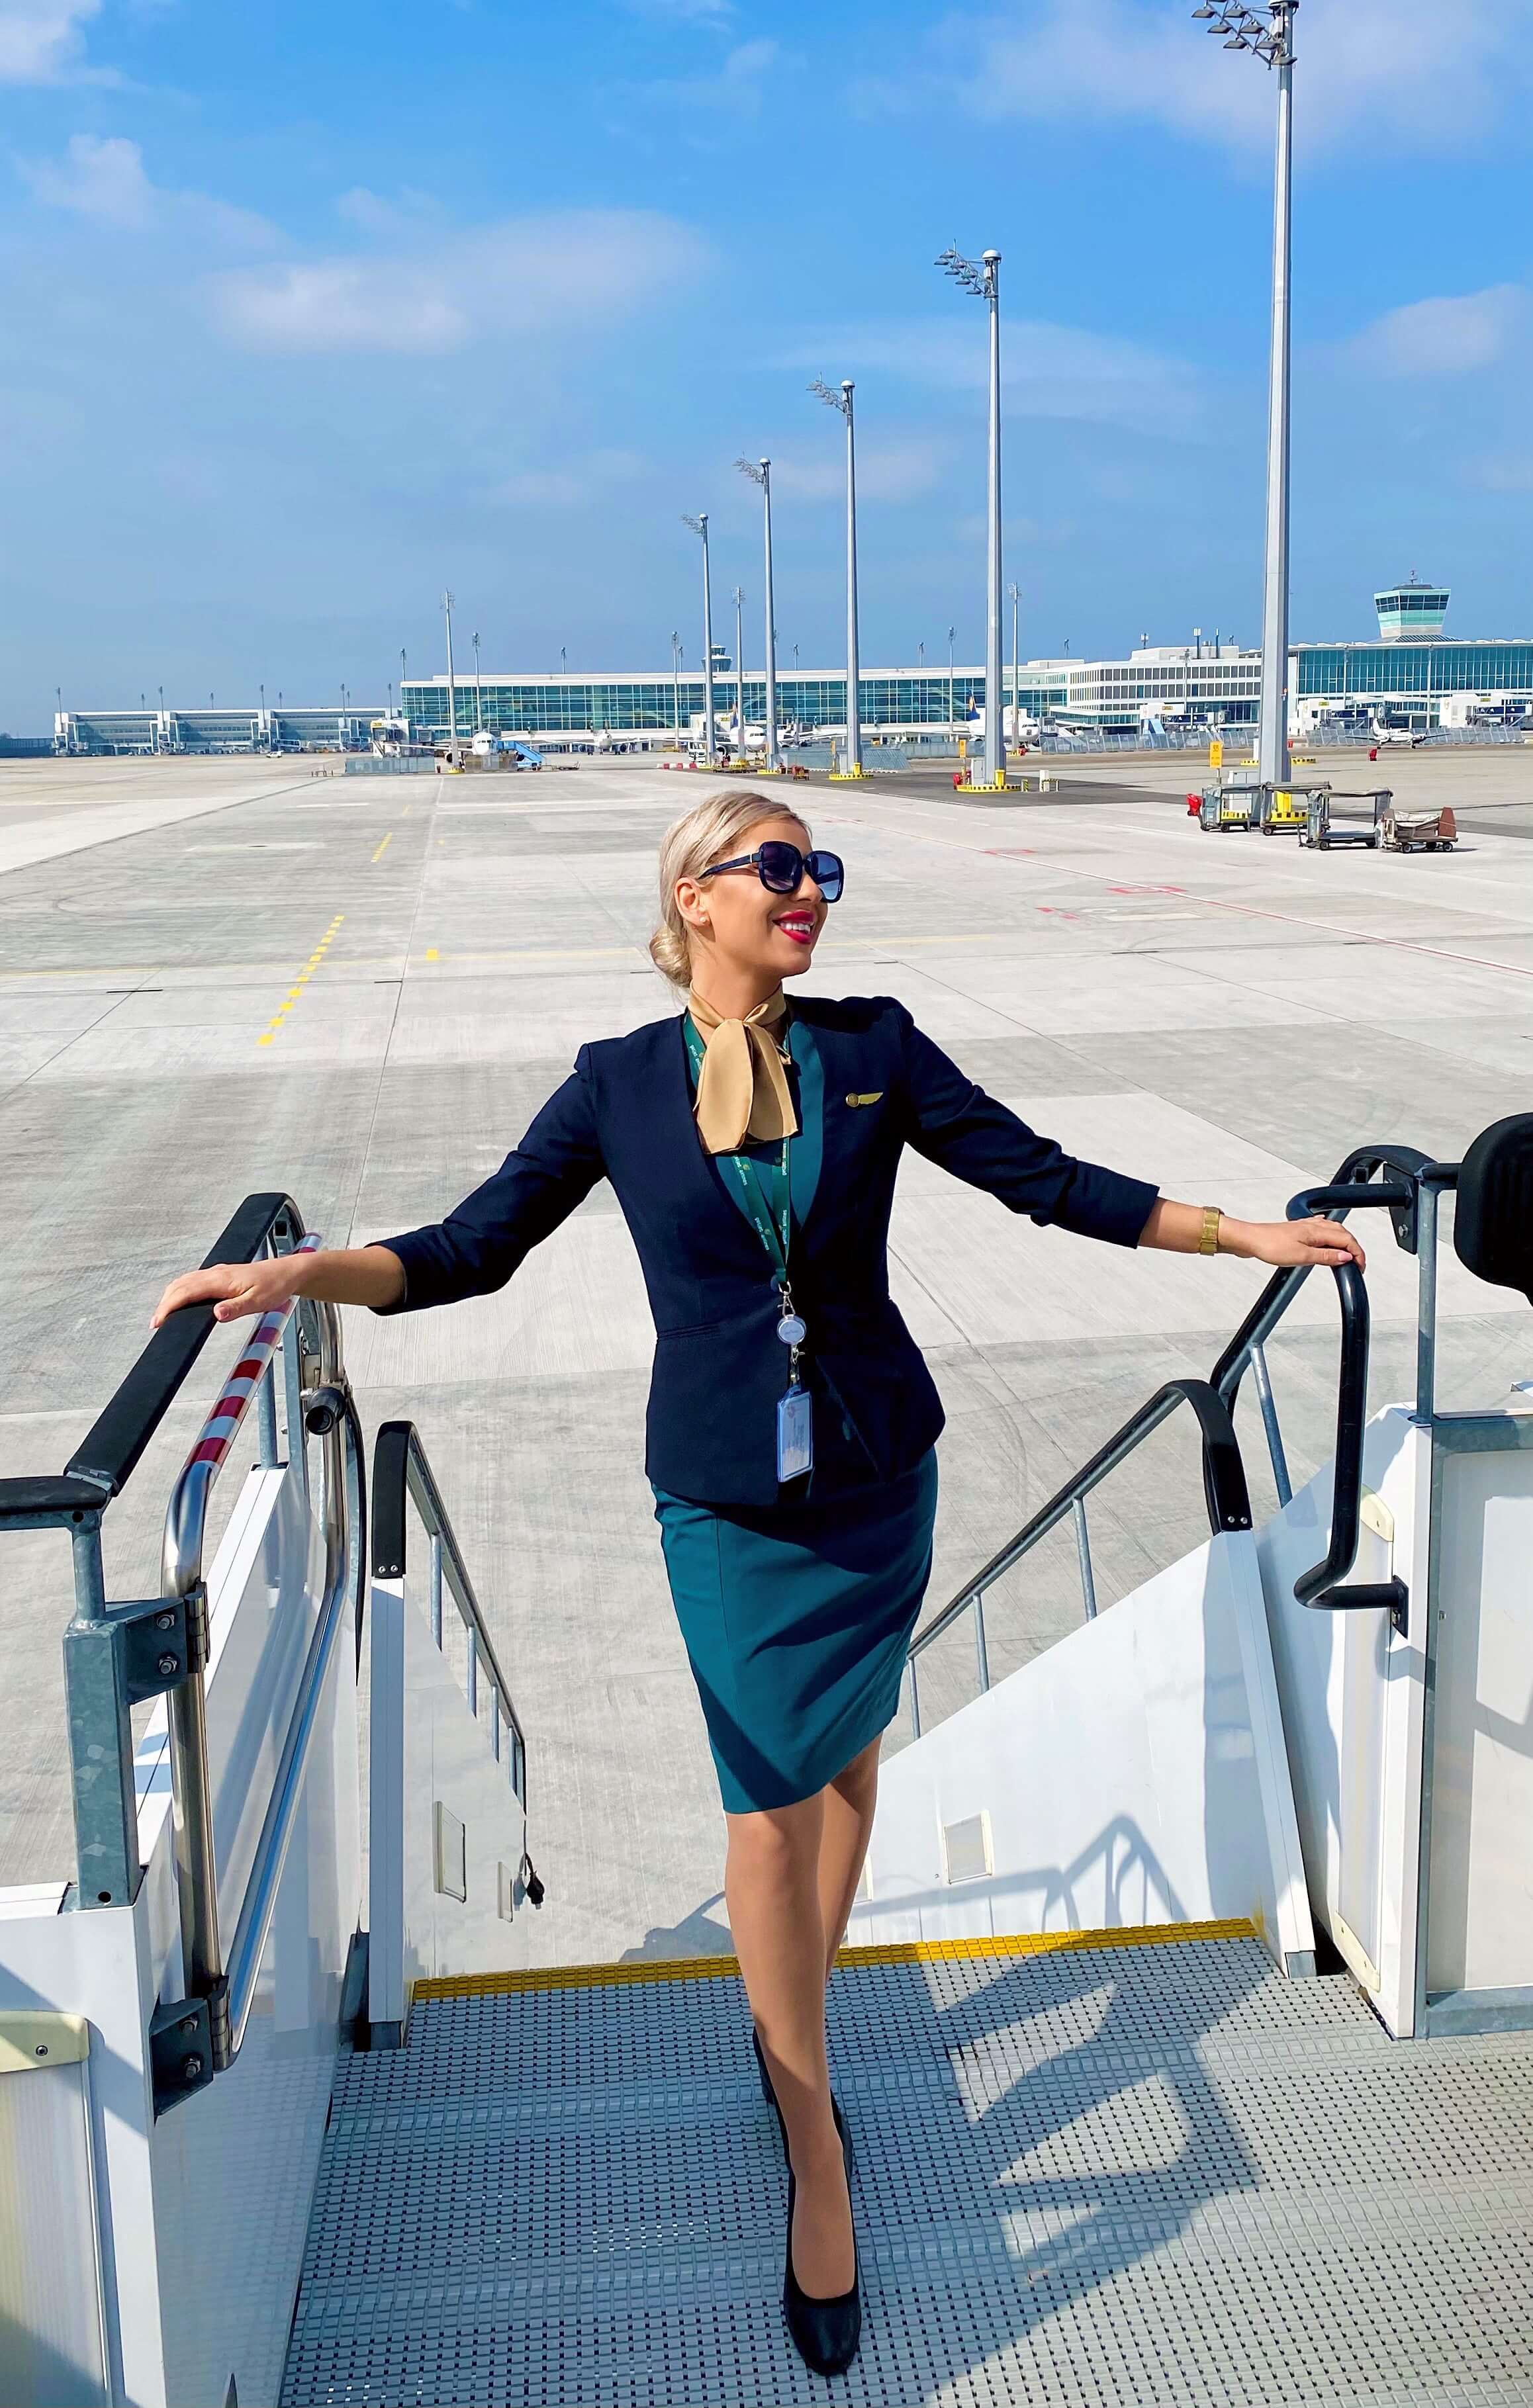 Flight attendant Goda returns to aviation post-pandemic, ignites 